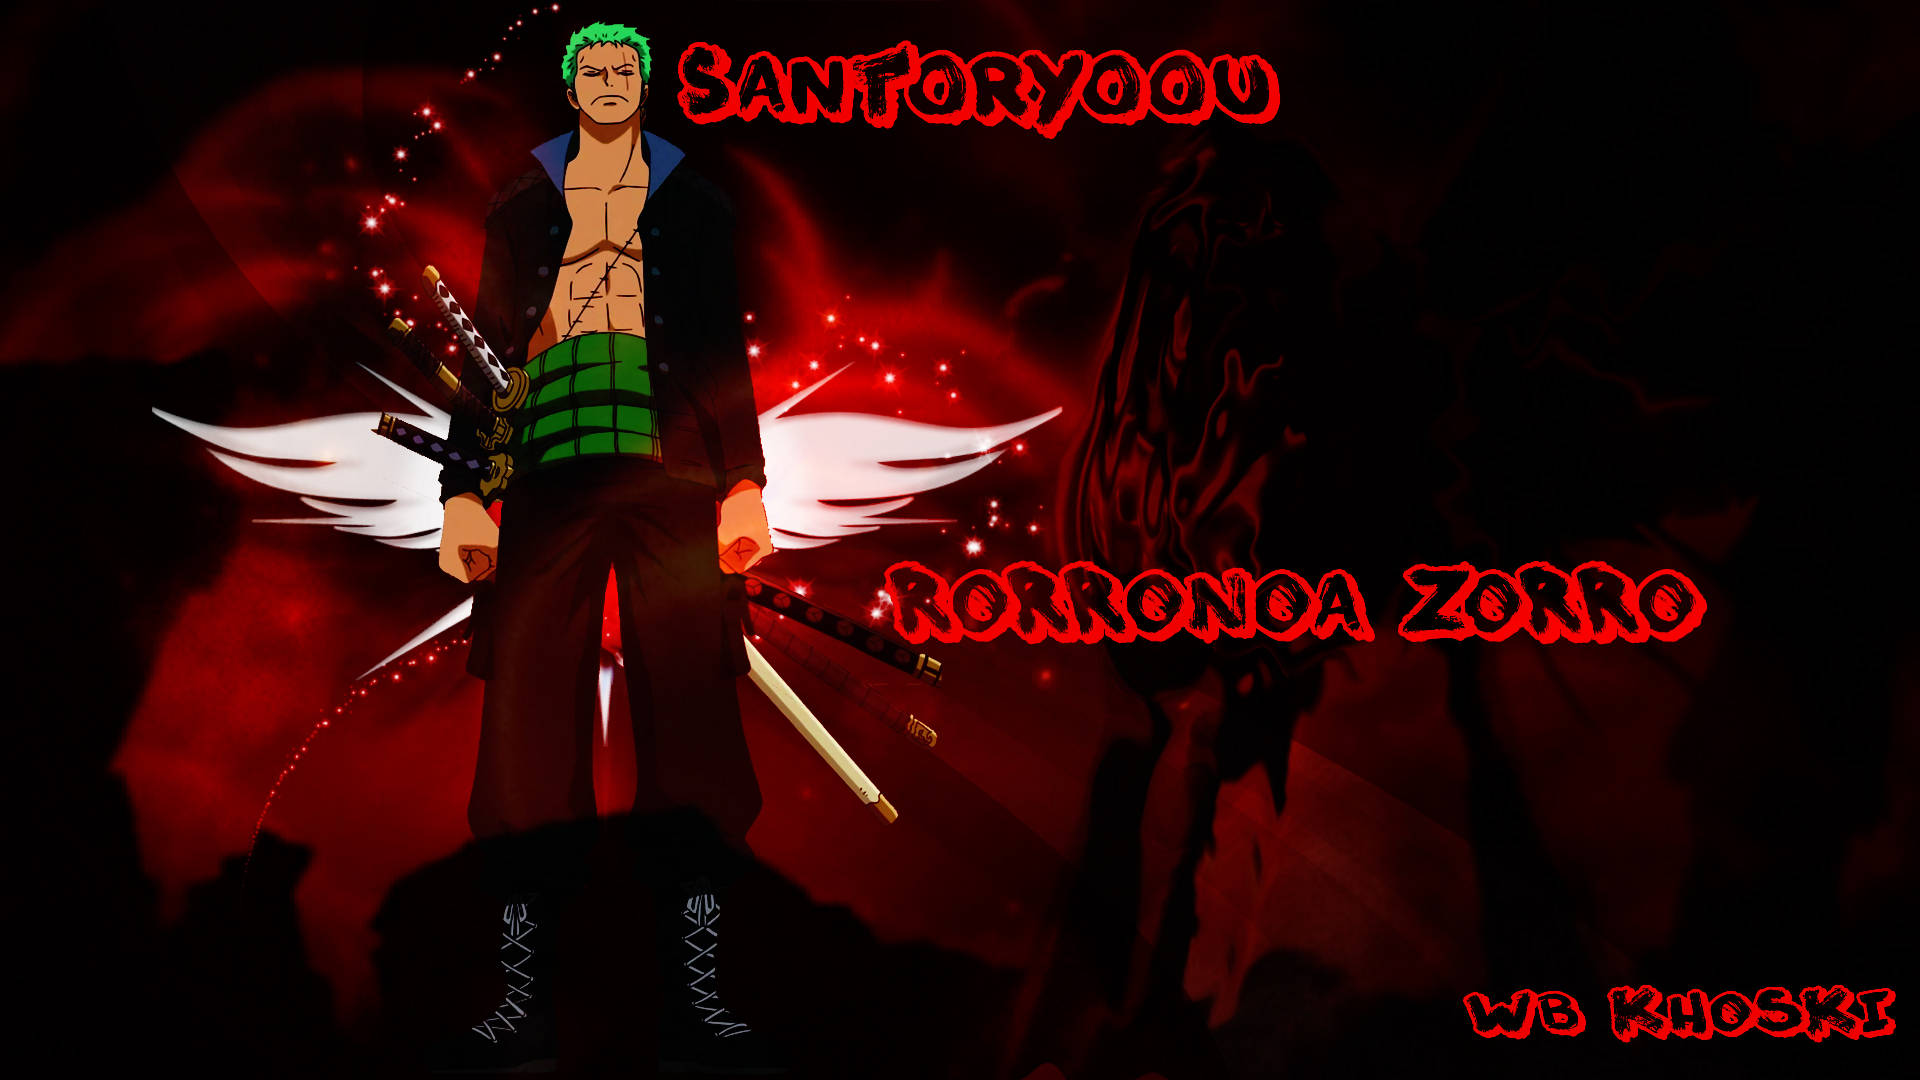 Roronoa Zoro - The Unstoppable Swordsman